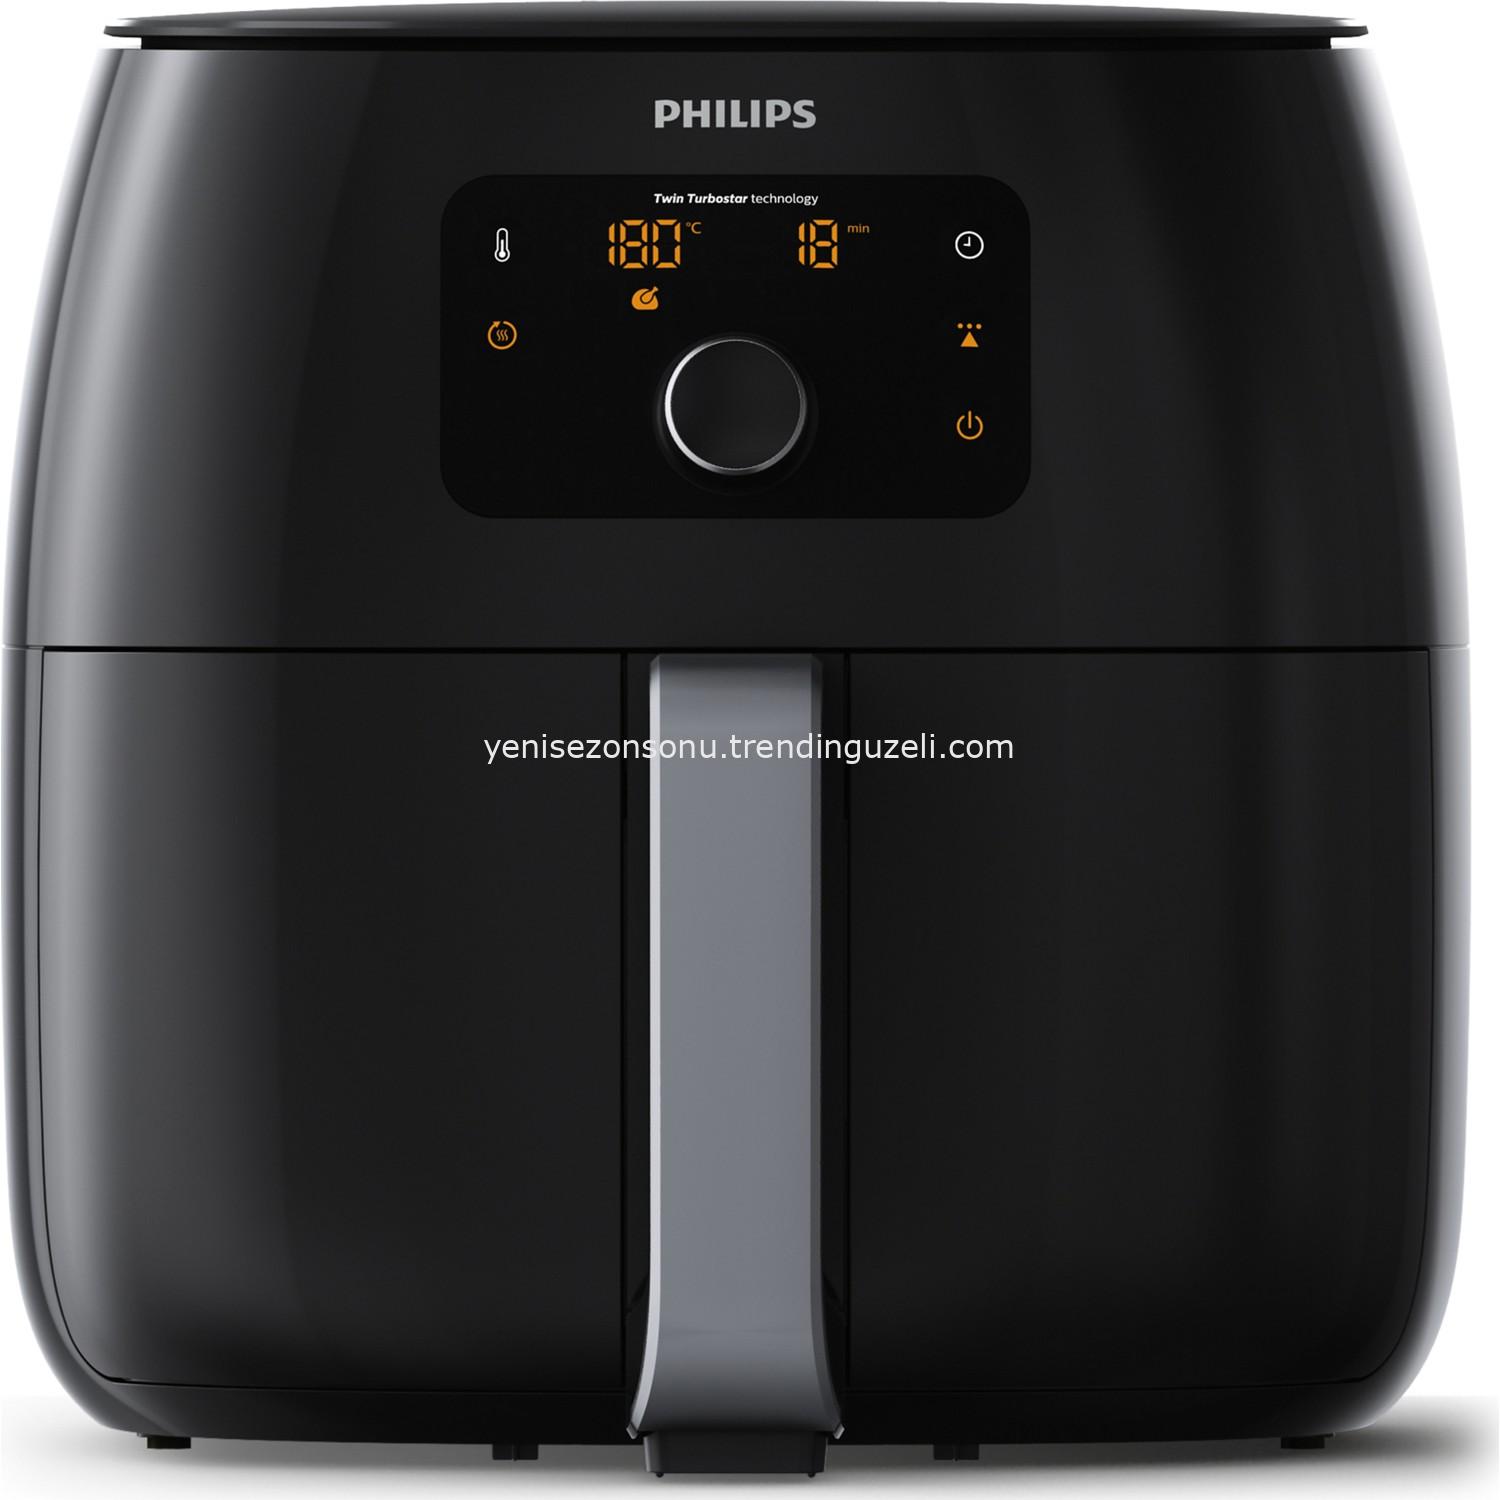 Defolu Spot Philips Avance Collection Airfryer Fritoz 1